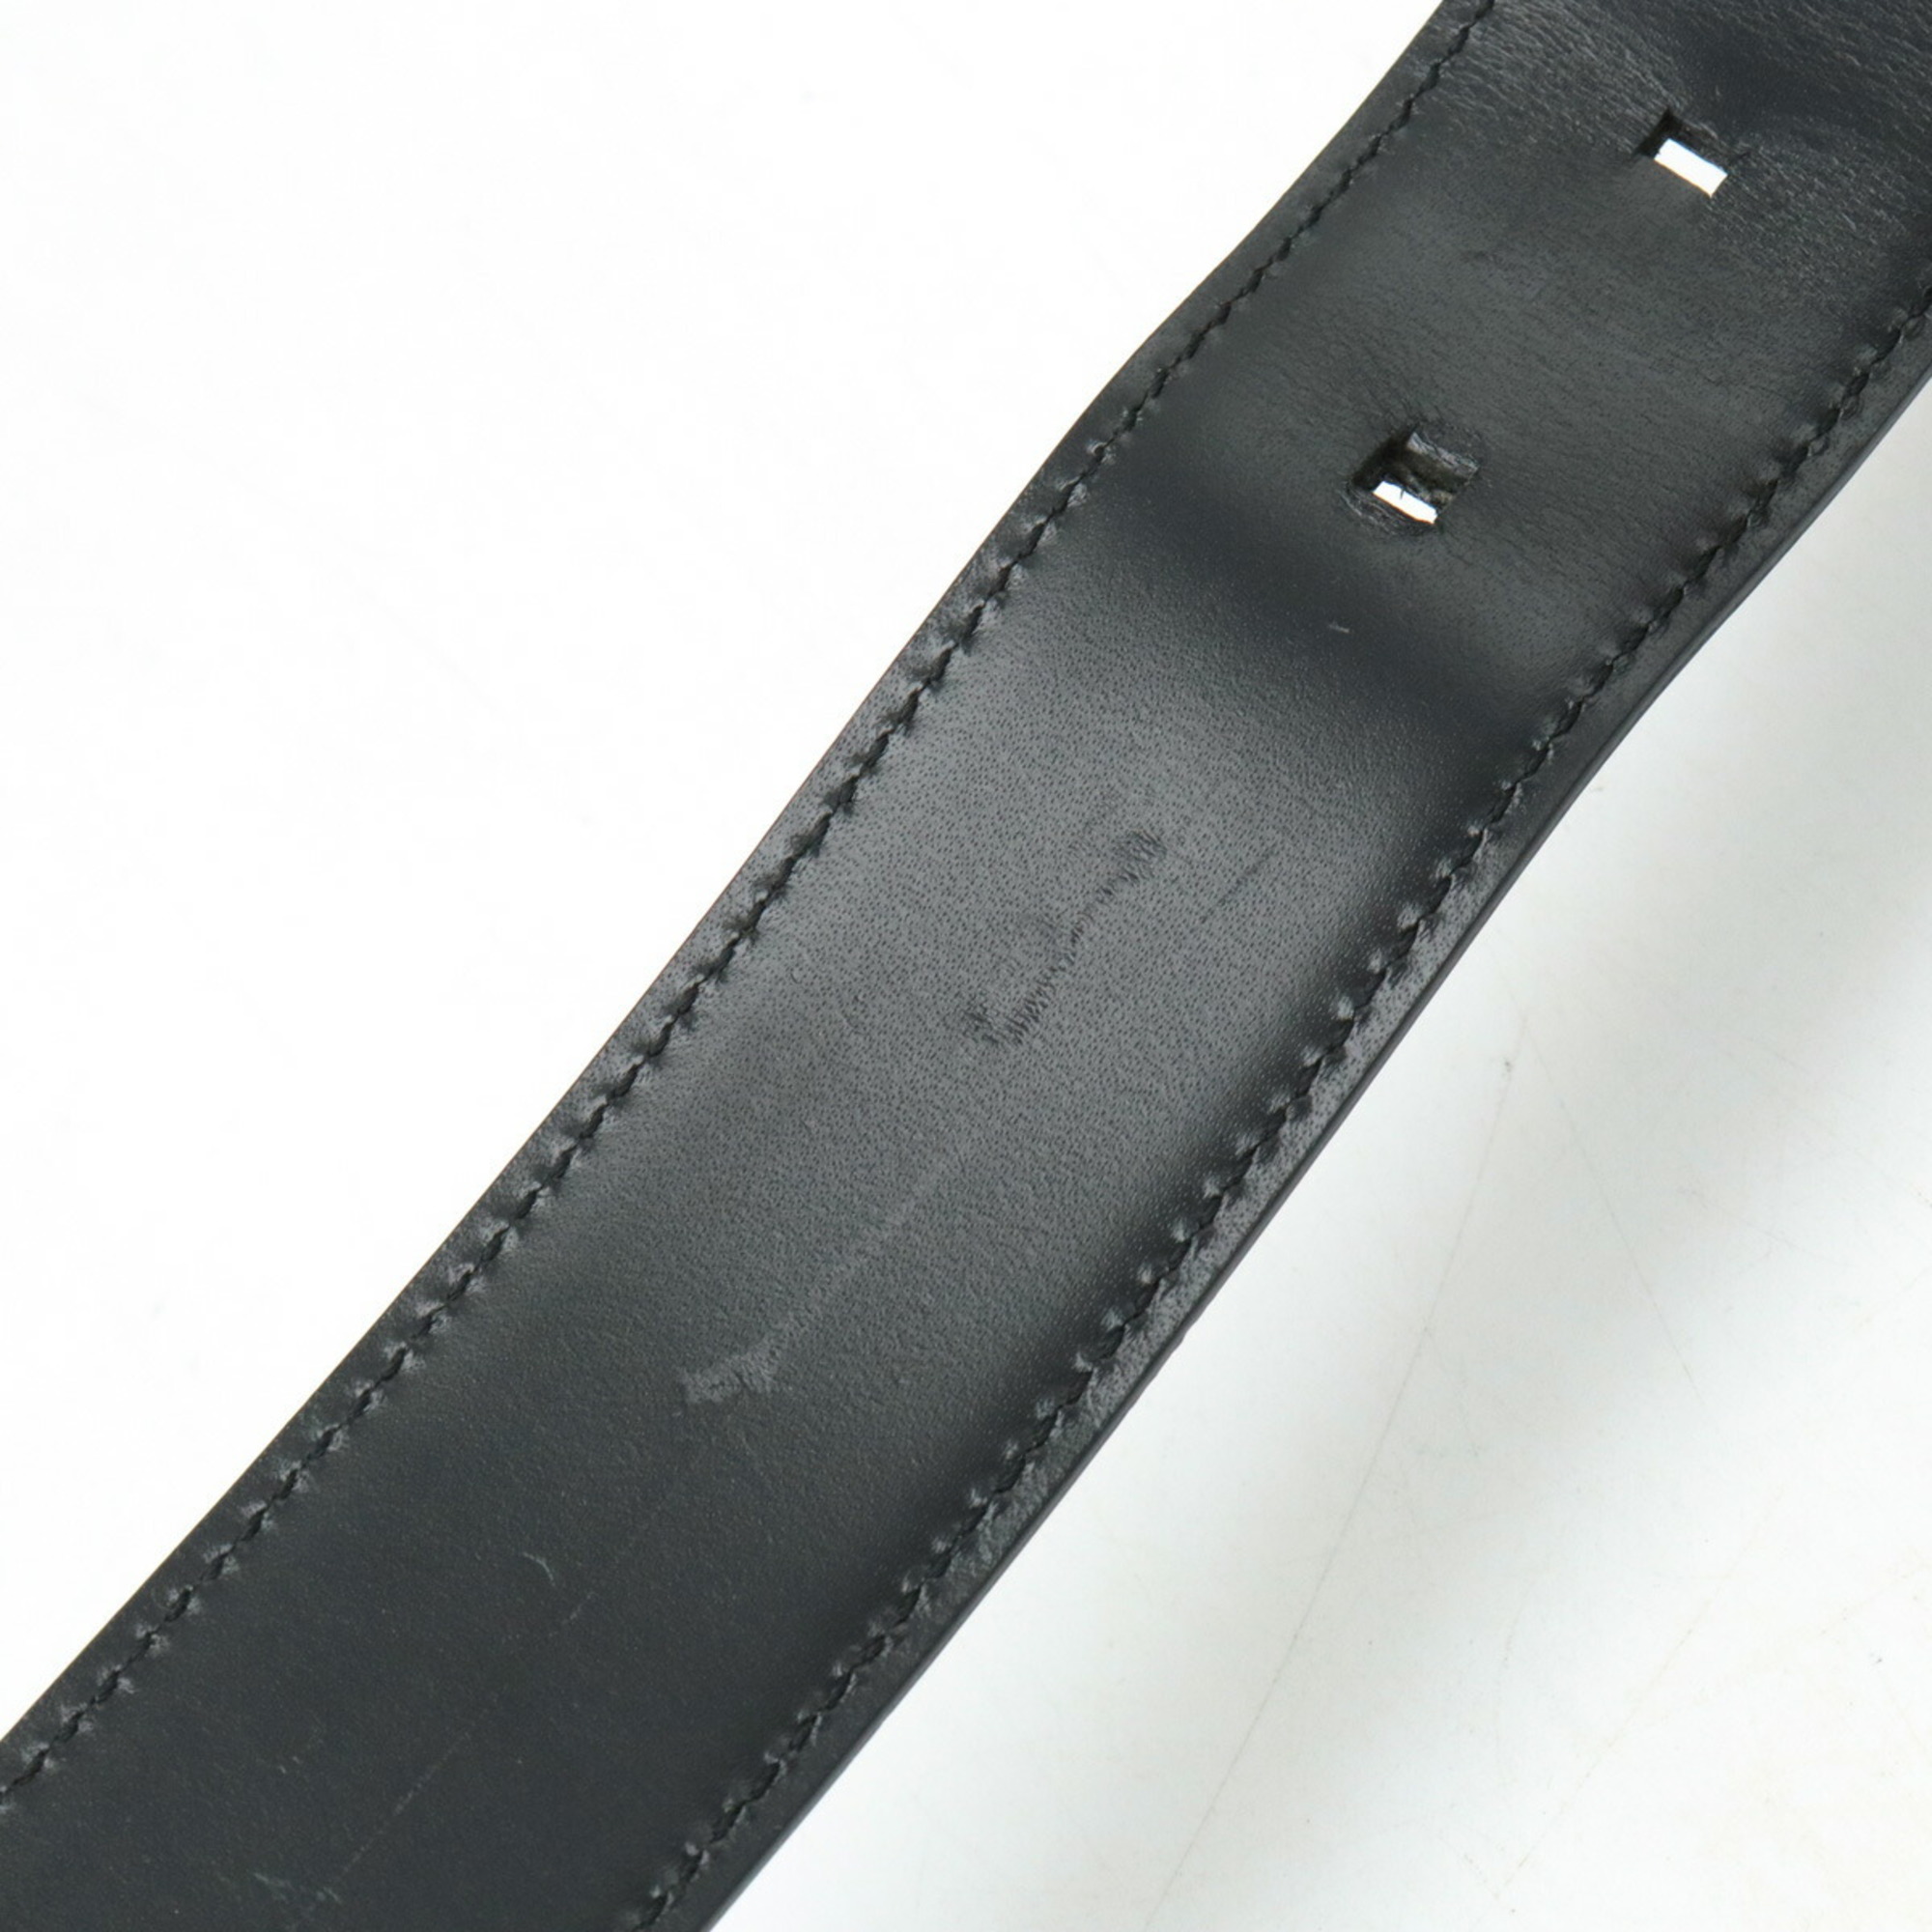 BVLGARI Bulgari belt, square, grained leather, black, size 42/105, actual approx. 87cm, cut, 20228